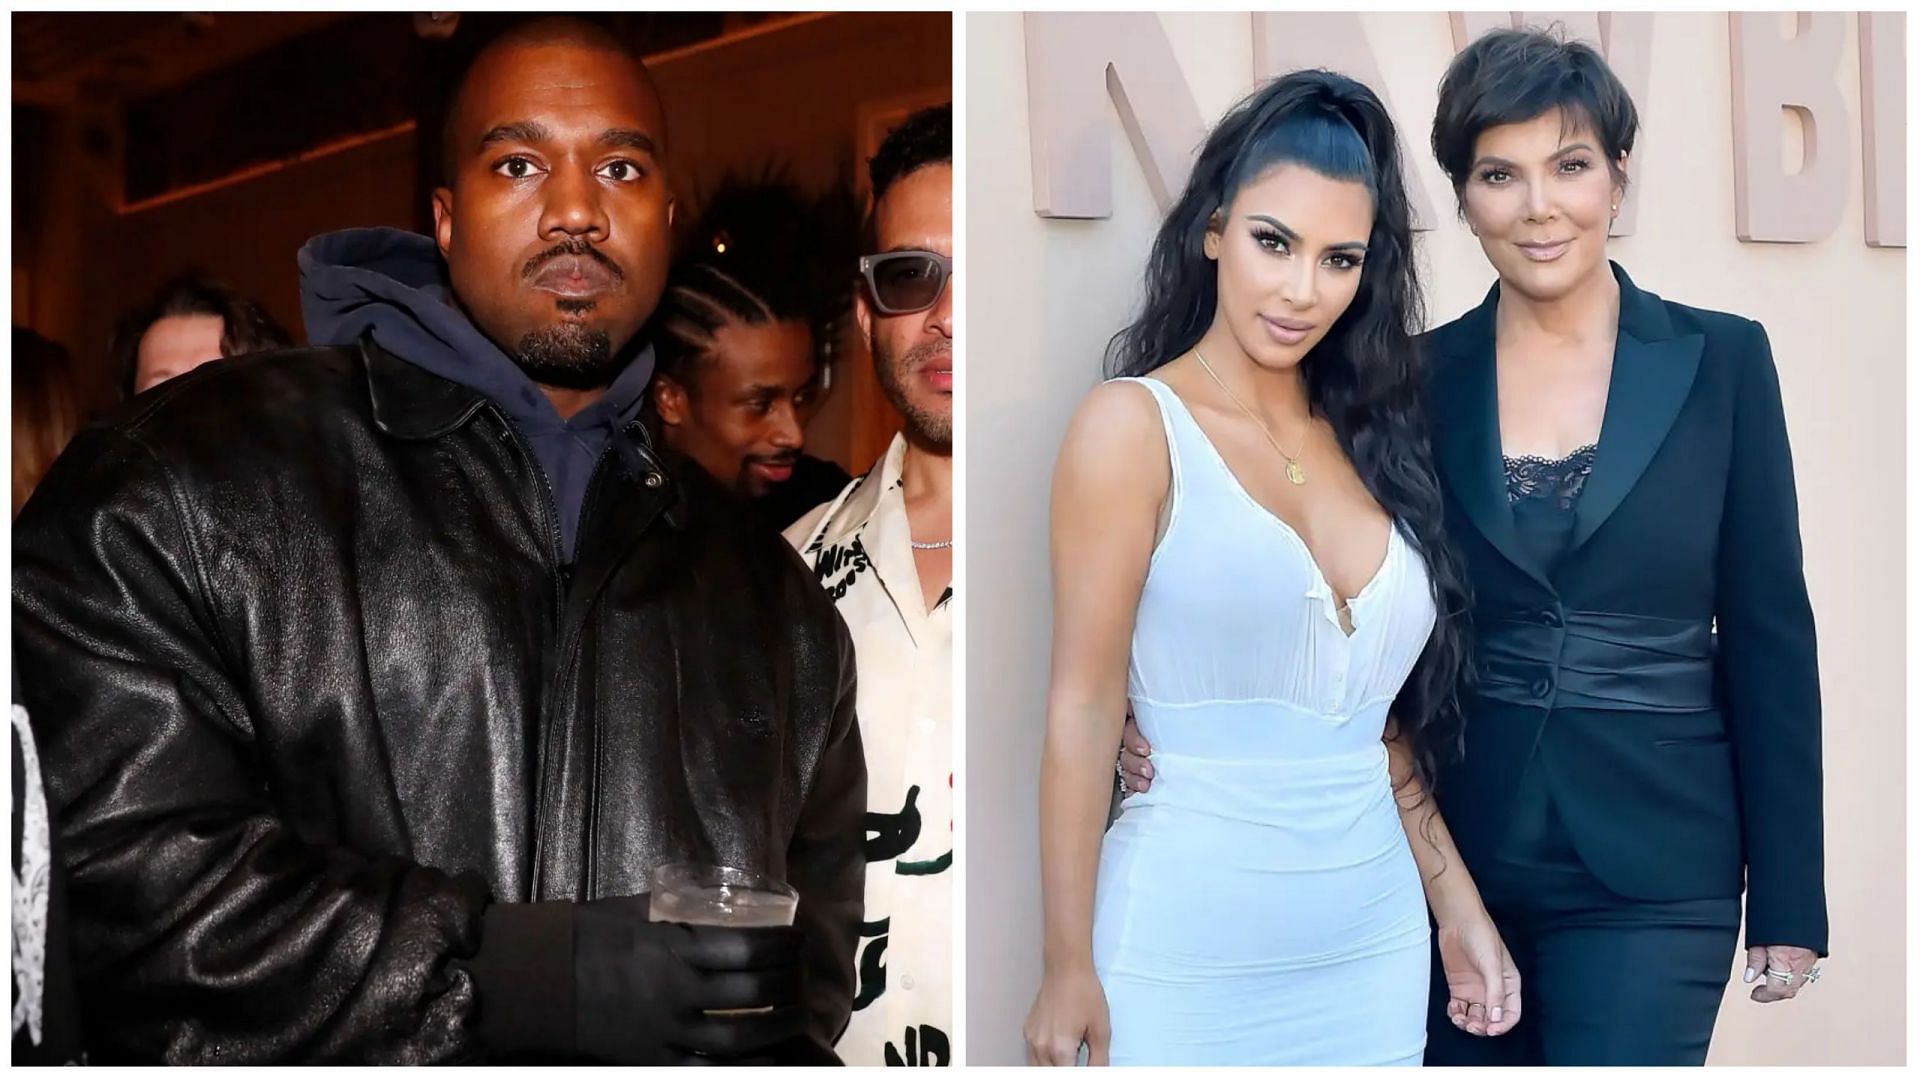 Kanye West slams Kris Jenner saying she made Kim and Kylie pose for Playboy magazine (Image via Johnny Nunez and Stefanie Keenan/Getty Images)